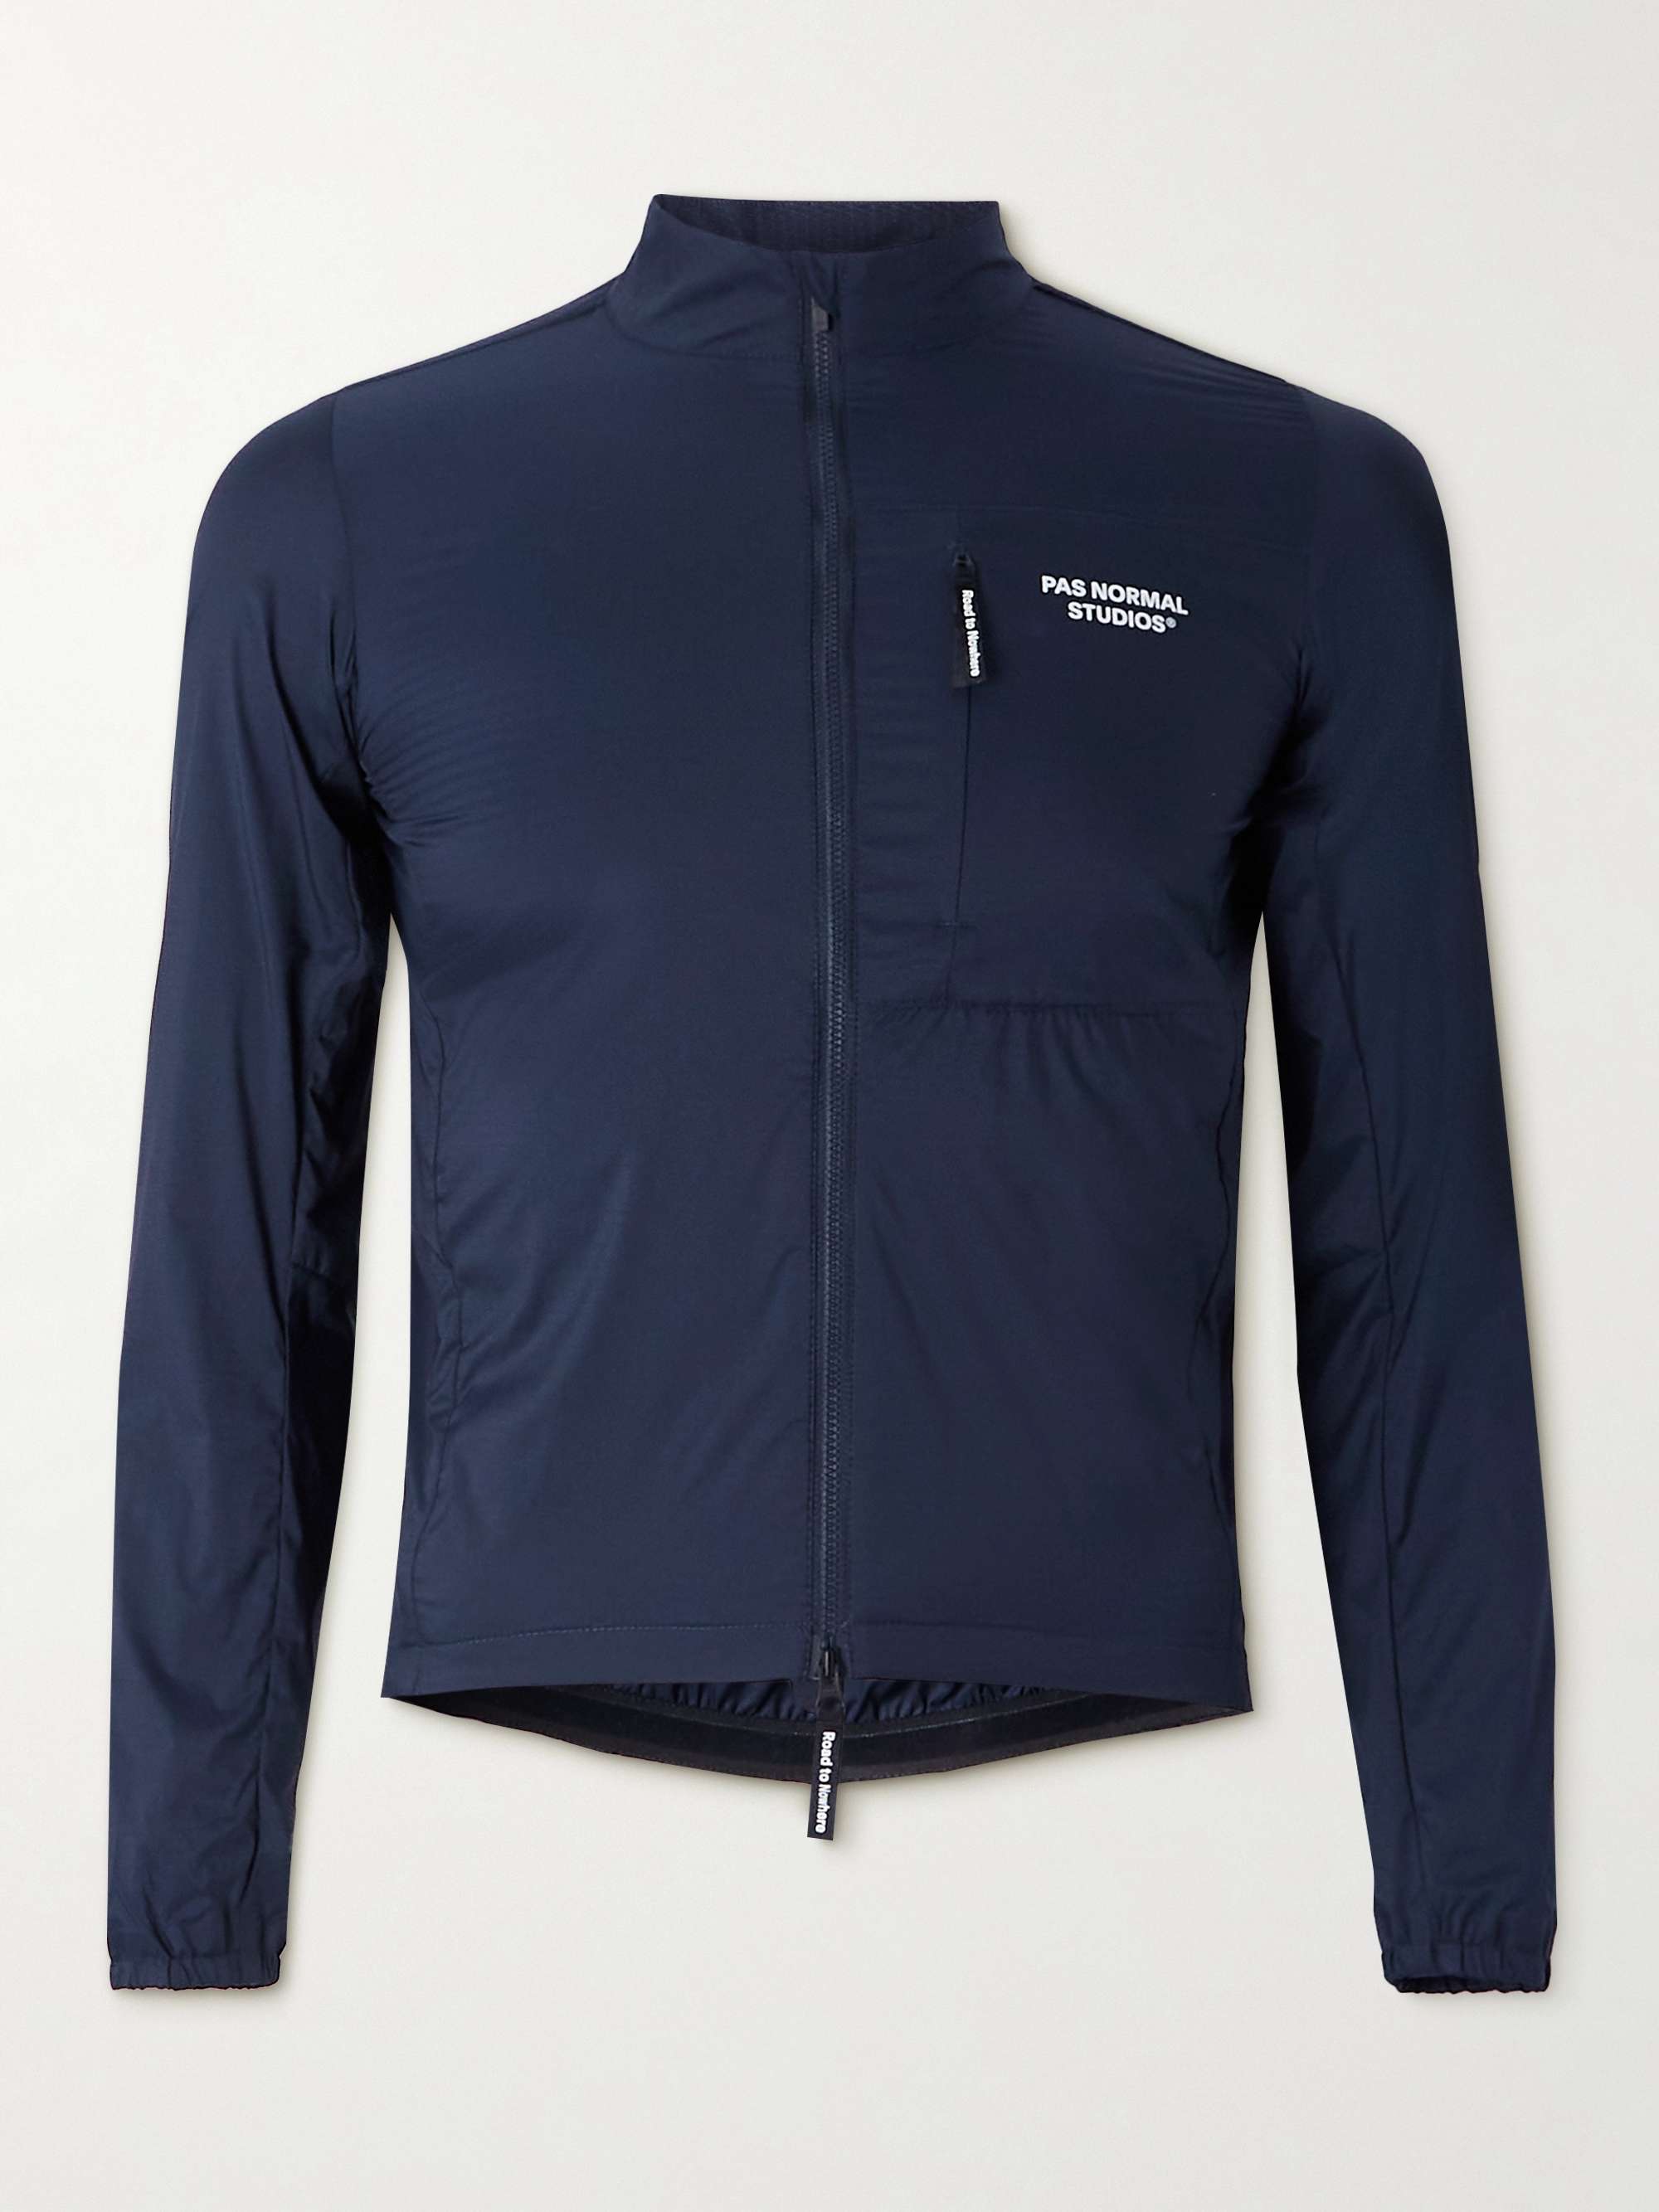 PAS NORMAL STUDIOS Stow Away Slim-Fit Logo-Print Cycling Jacket